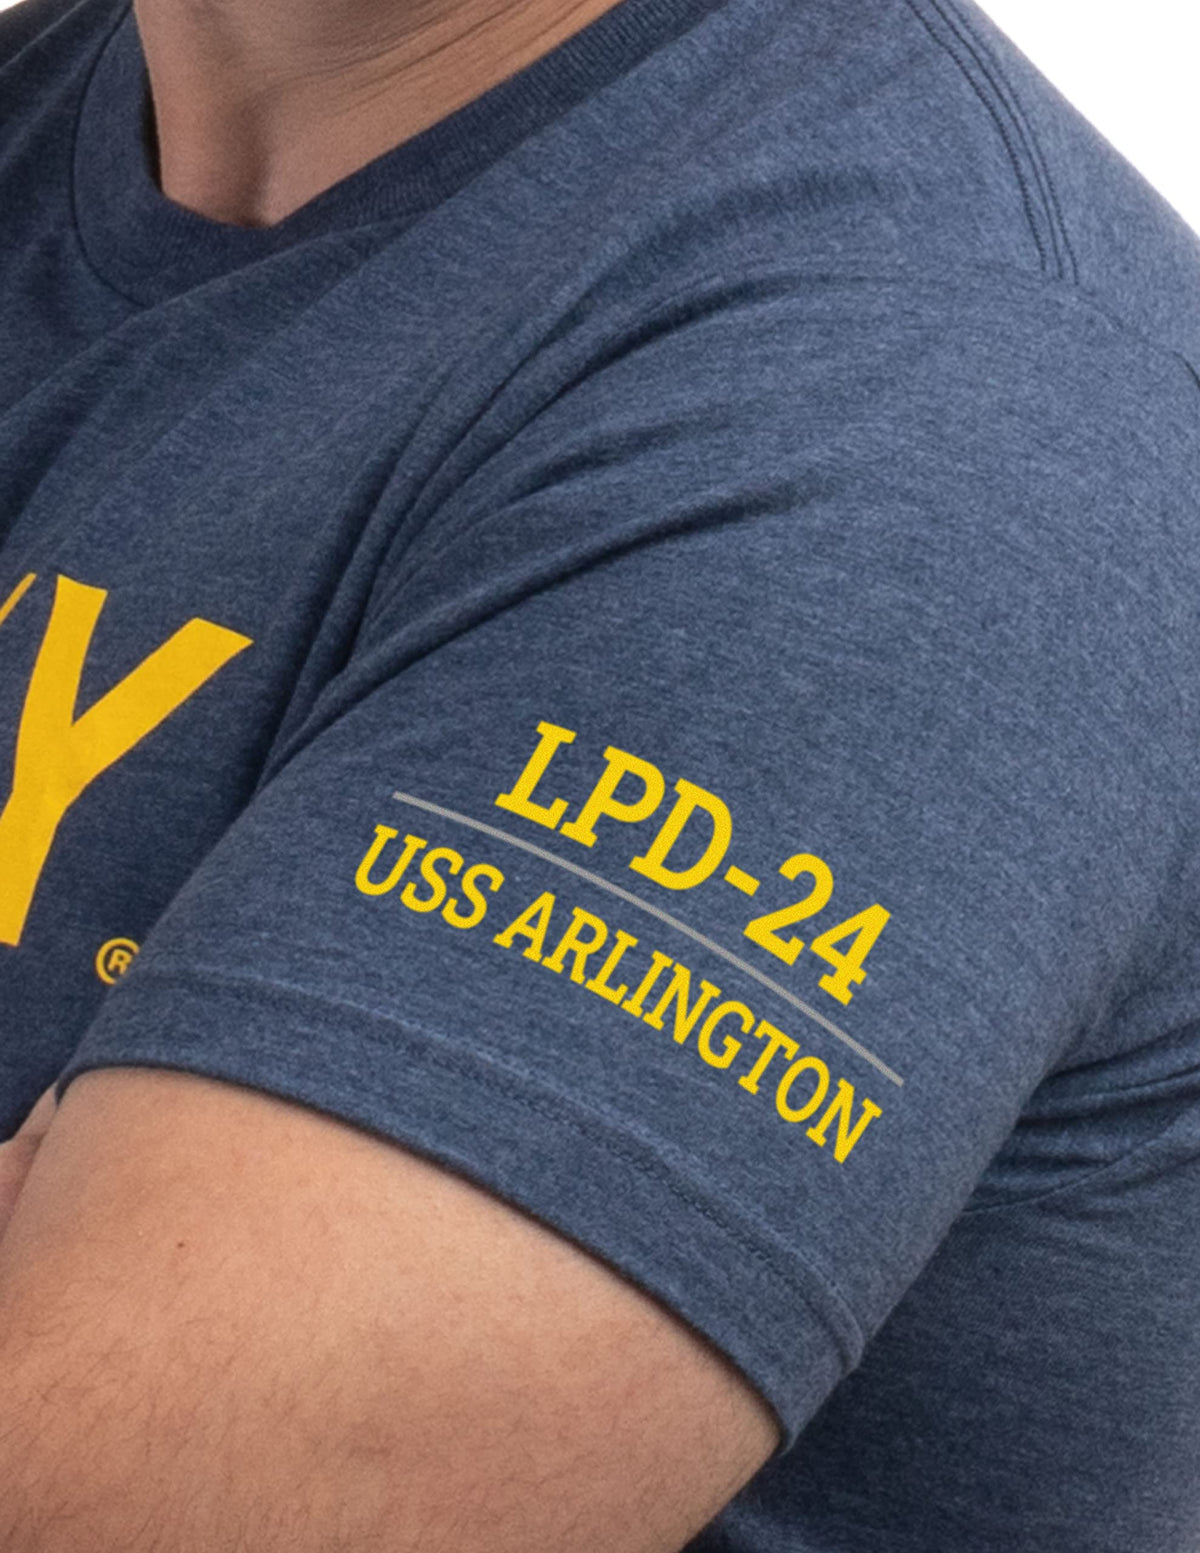 USS Arlington, LPD-24 | U.S. Navy Sailor Veteran USN United States Naval T-shirt for Men Women